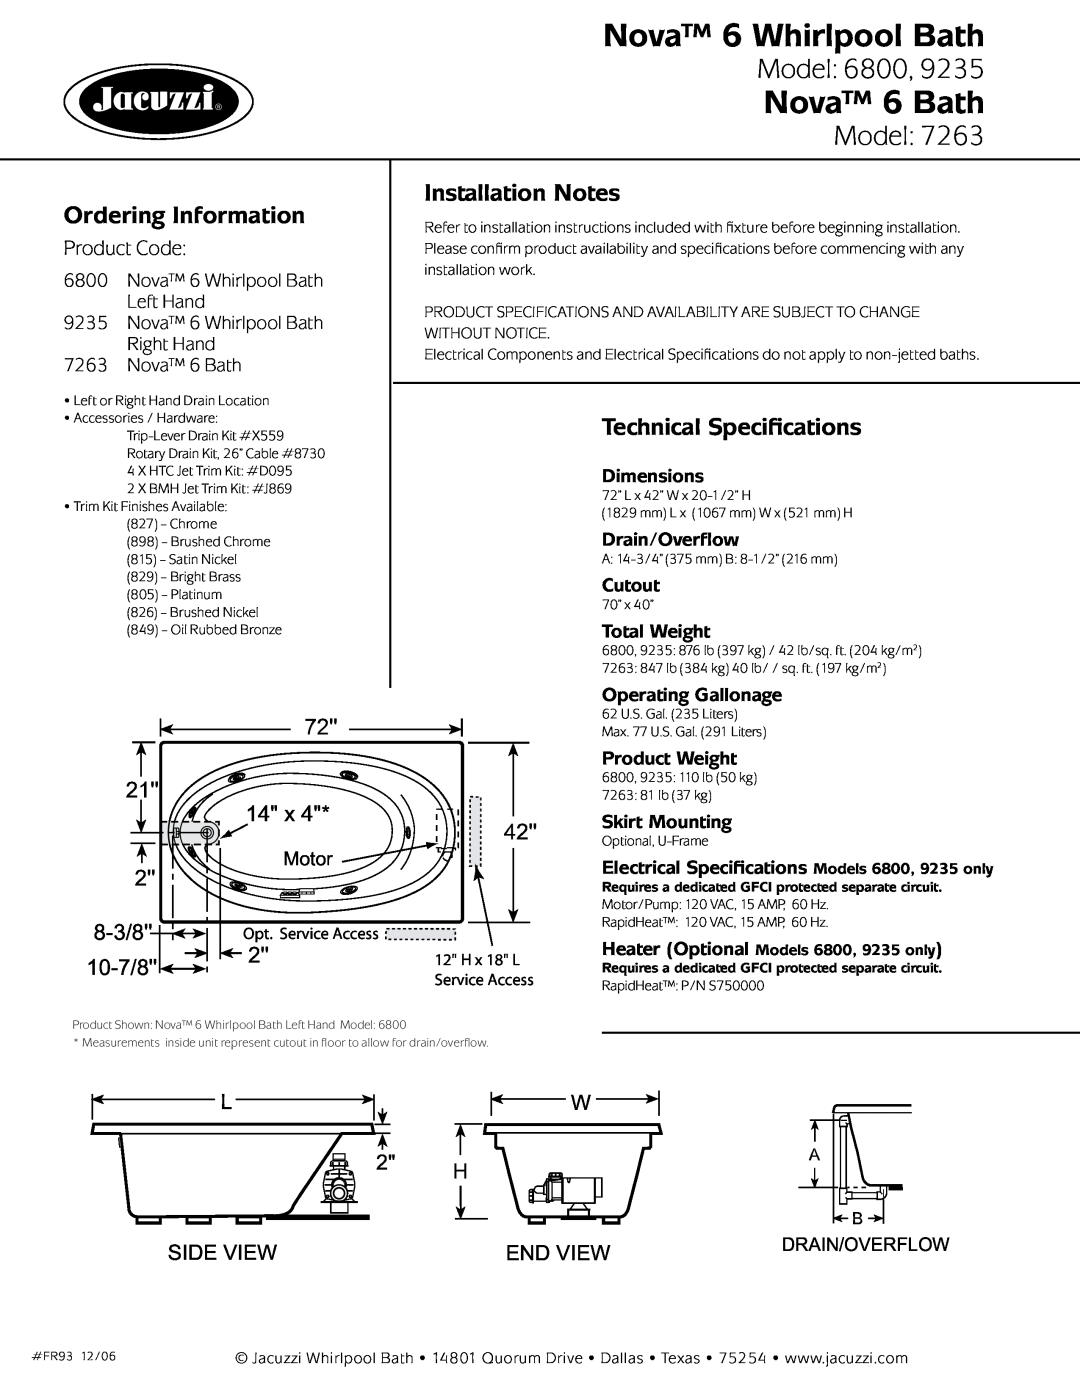 Jacuzzi 6800-LH Nova 6 Whirlpool Bath, Nova 6 Bath, Model, Ordering Information, Installation Notes, 8-3/8, 10-7/8, Cutout 